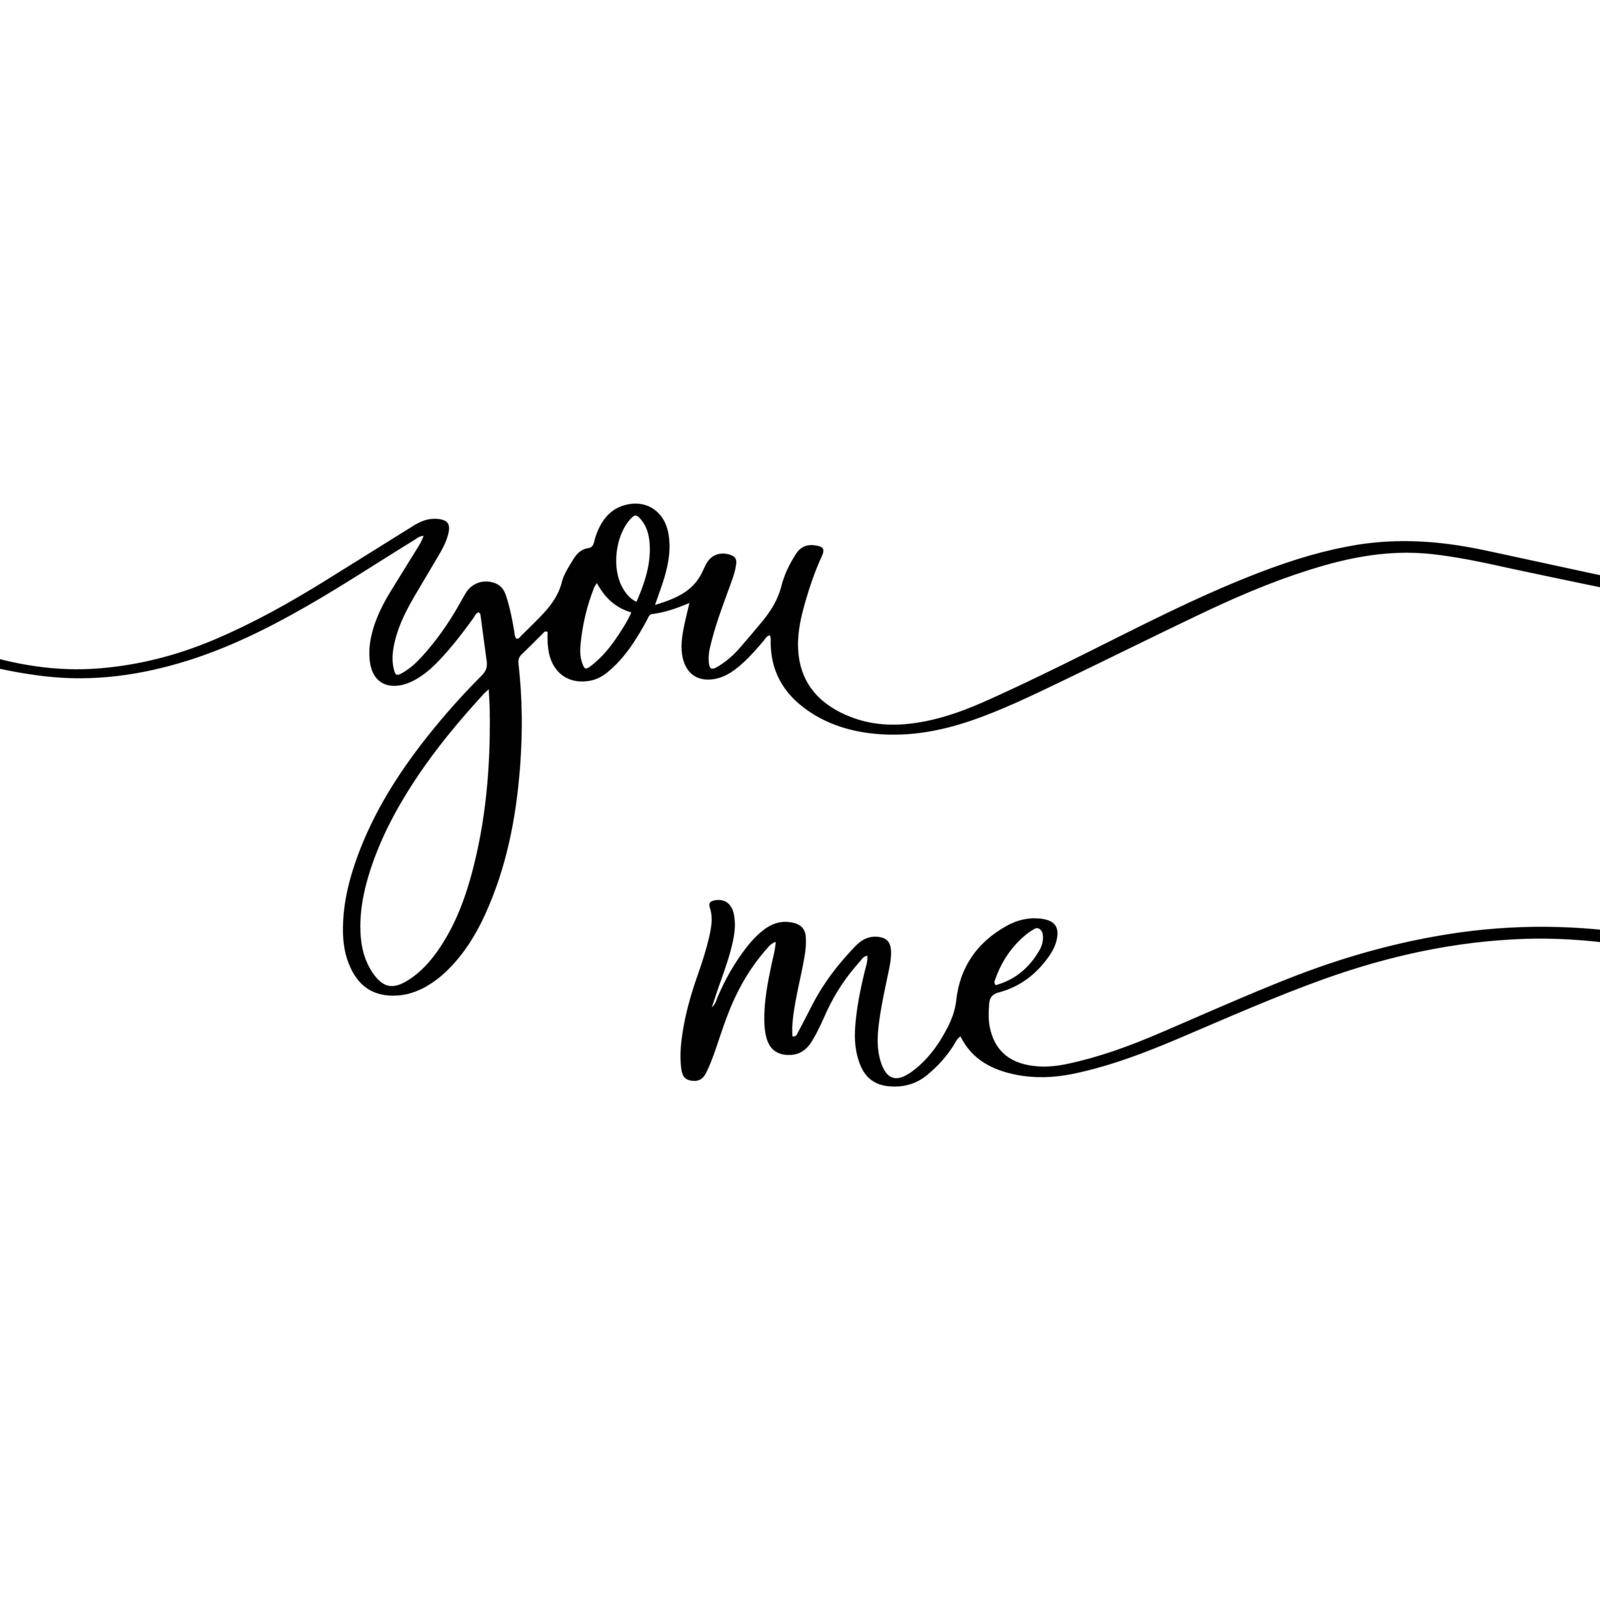 You and me delicate elegant hand lettering. by ku4erashka